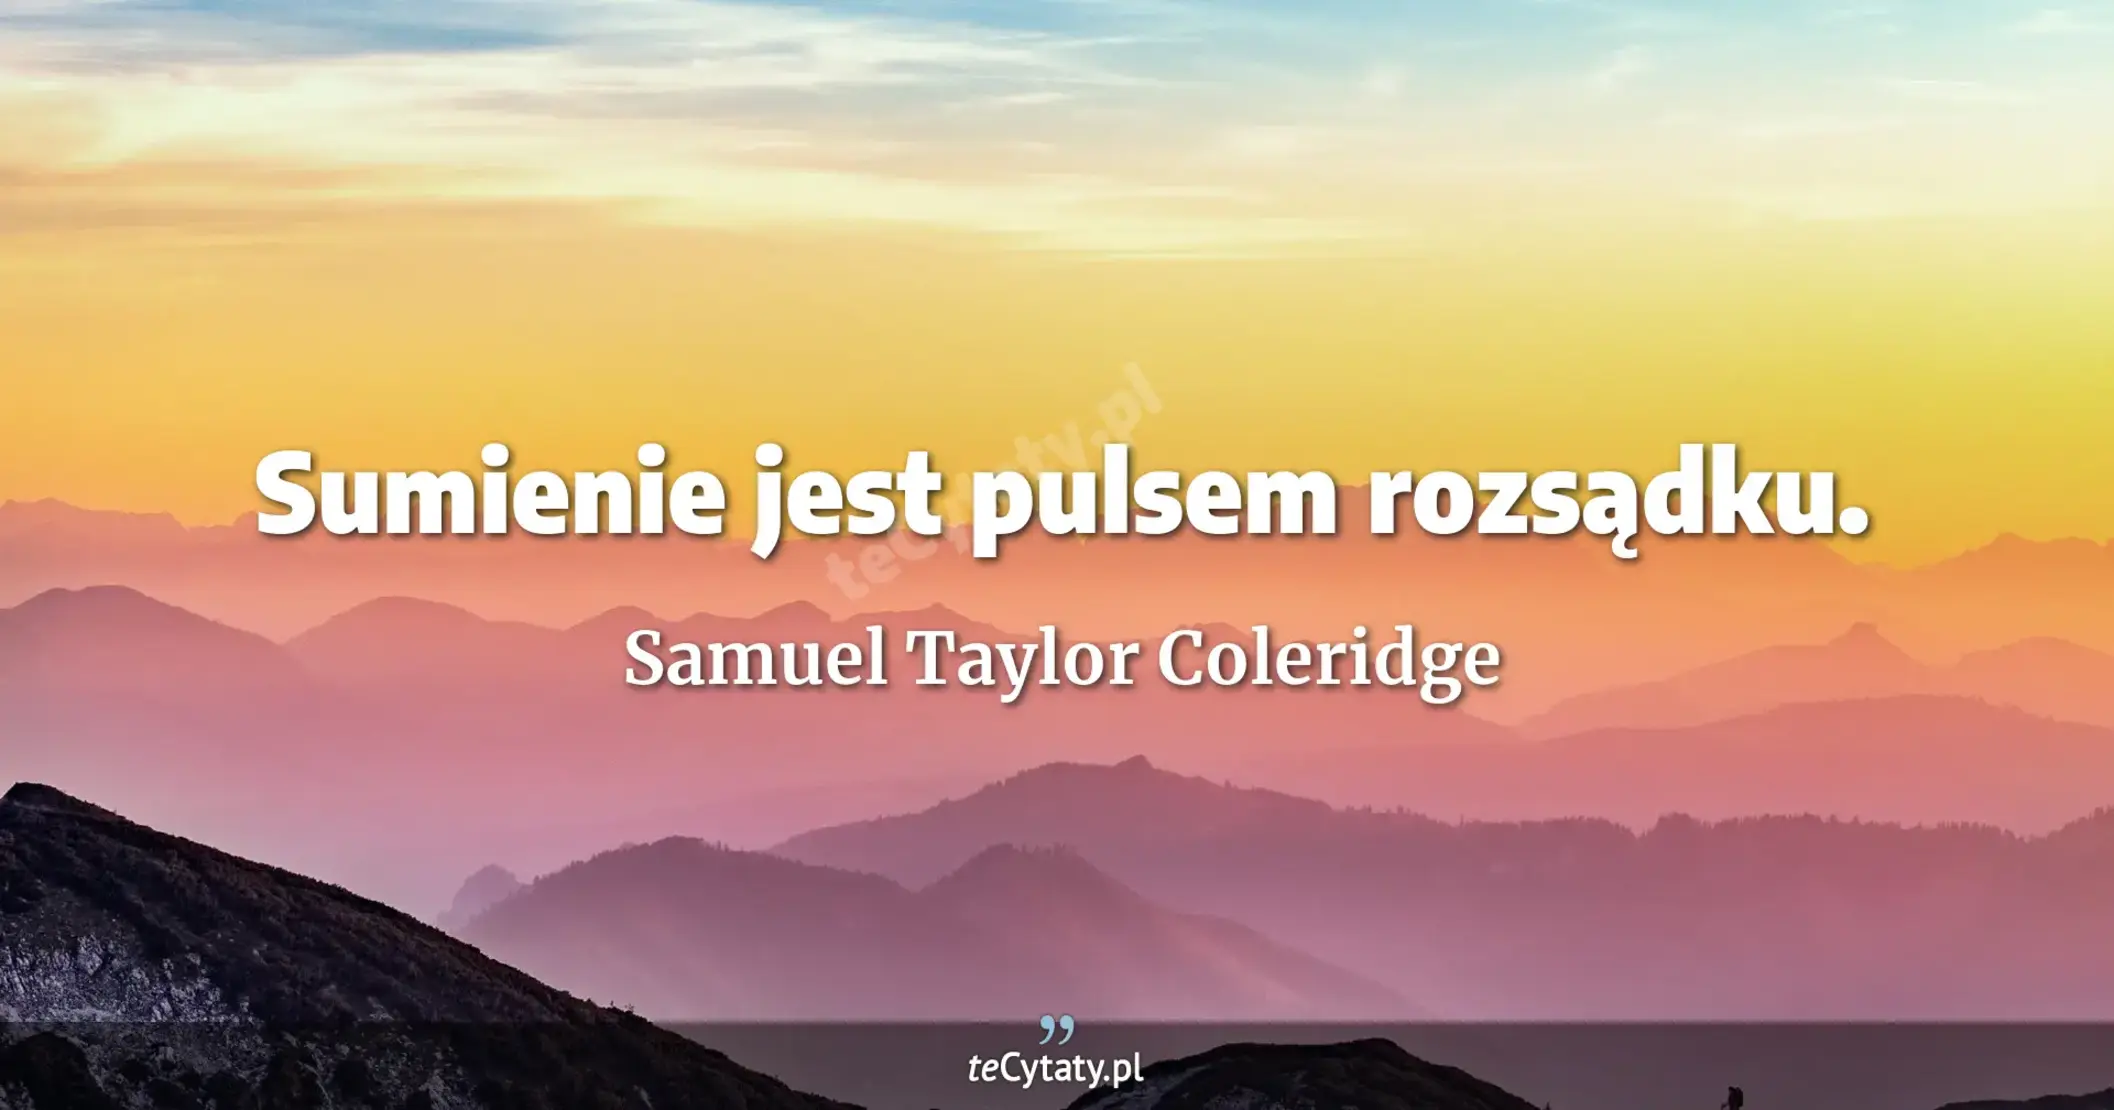 Sumienie jest pulsem rozsądku. - Samuel Taylor Coleridge